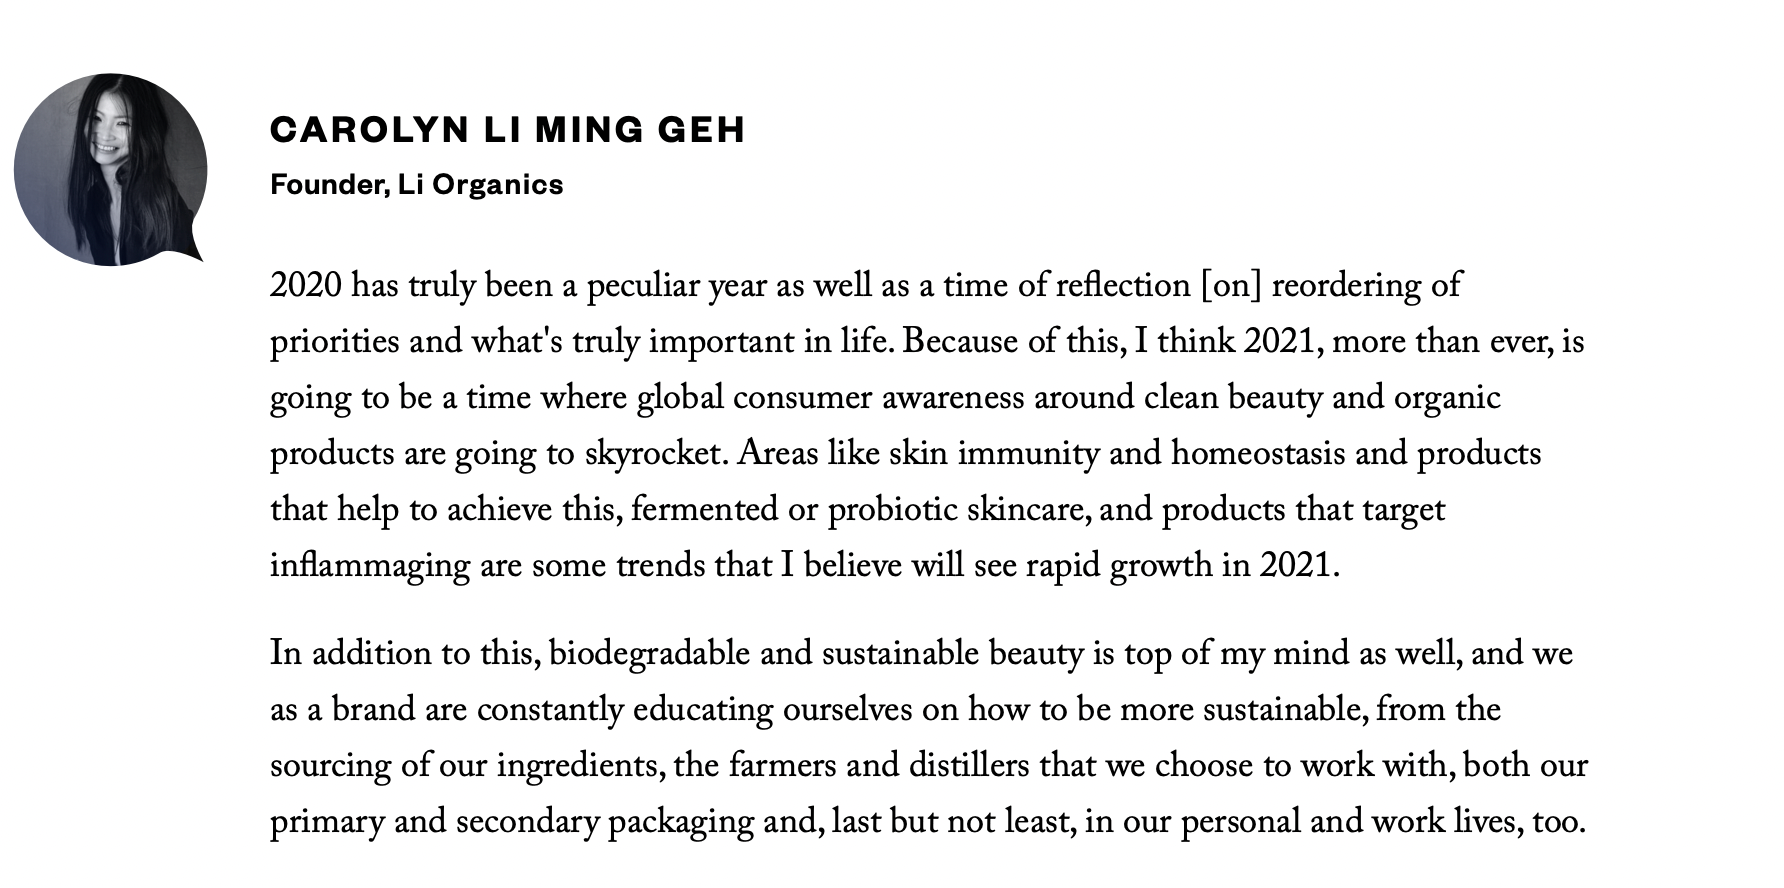 Carolyn Li Ming Geh Li organics founder. Her thoughts on skincare for 2021